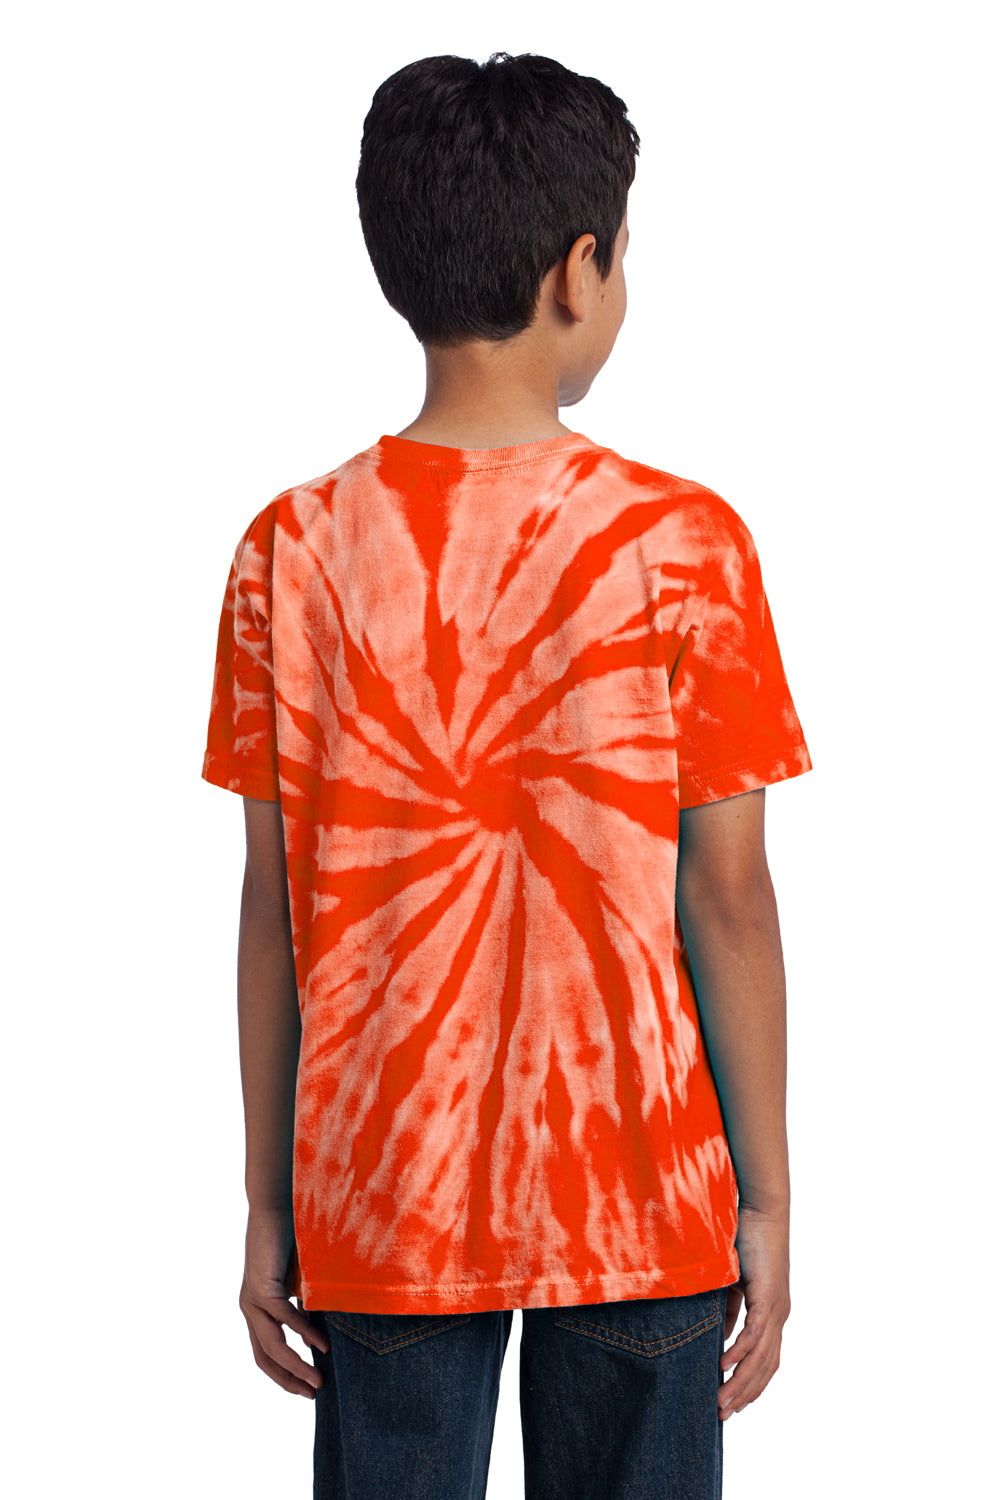 Port & Company PC147Y Youth Tie-Dye Short Sleeve Crewneck T-Shirt Orange Back